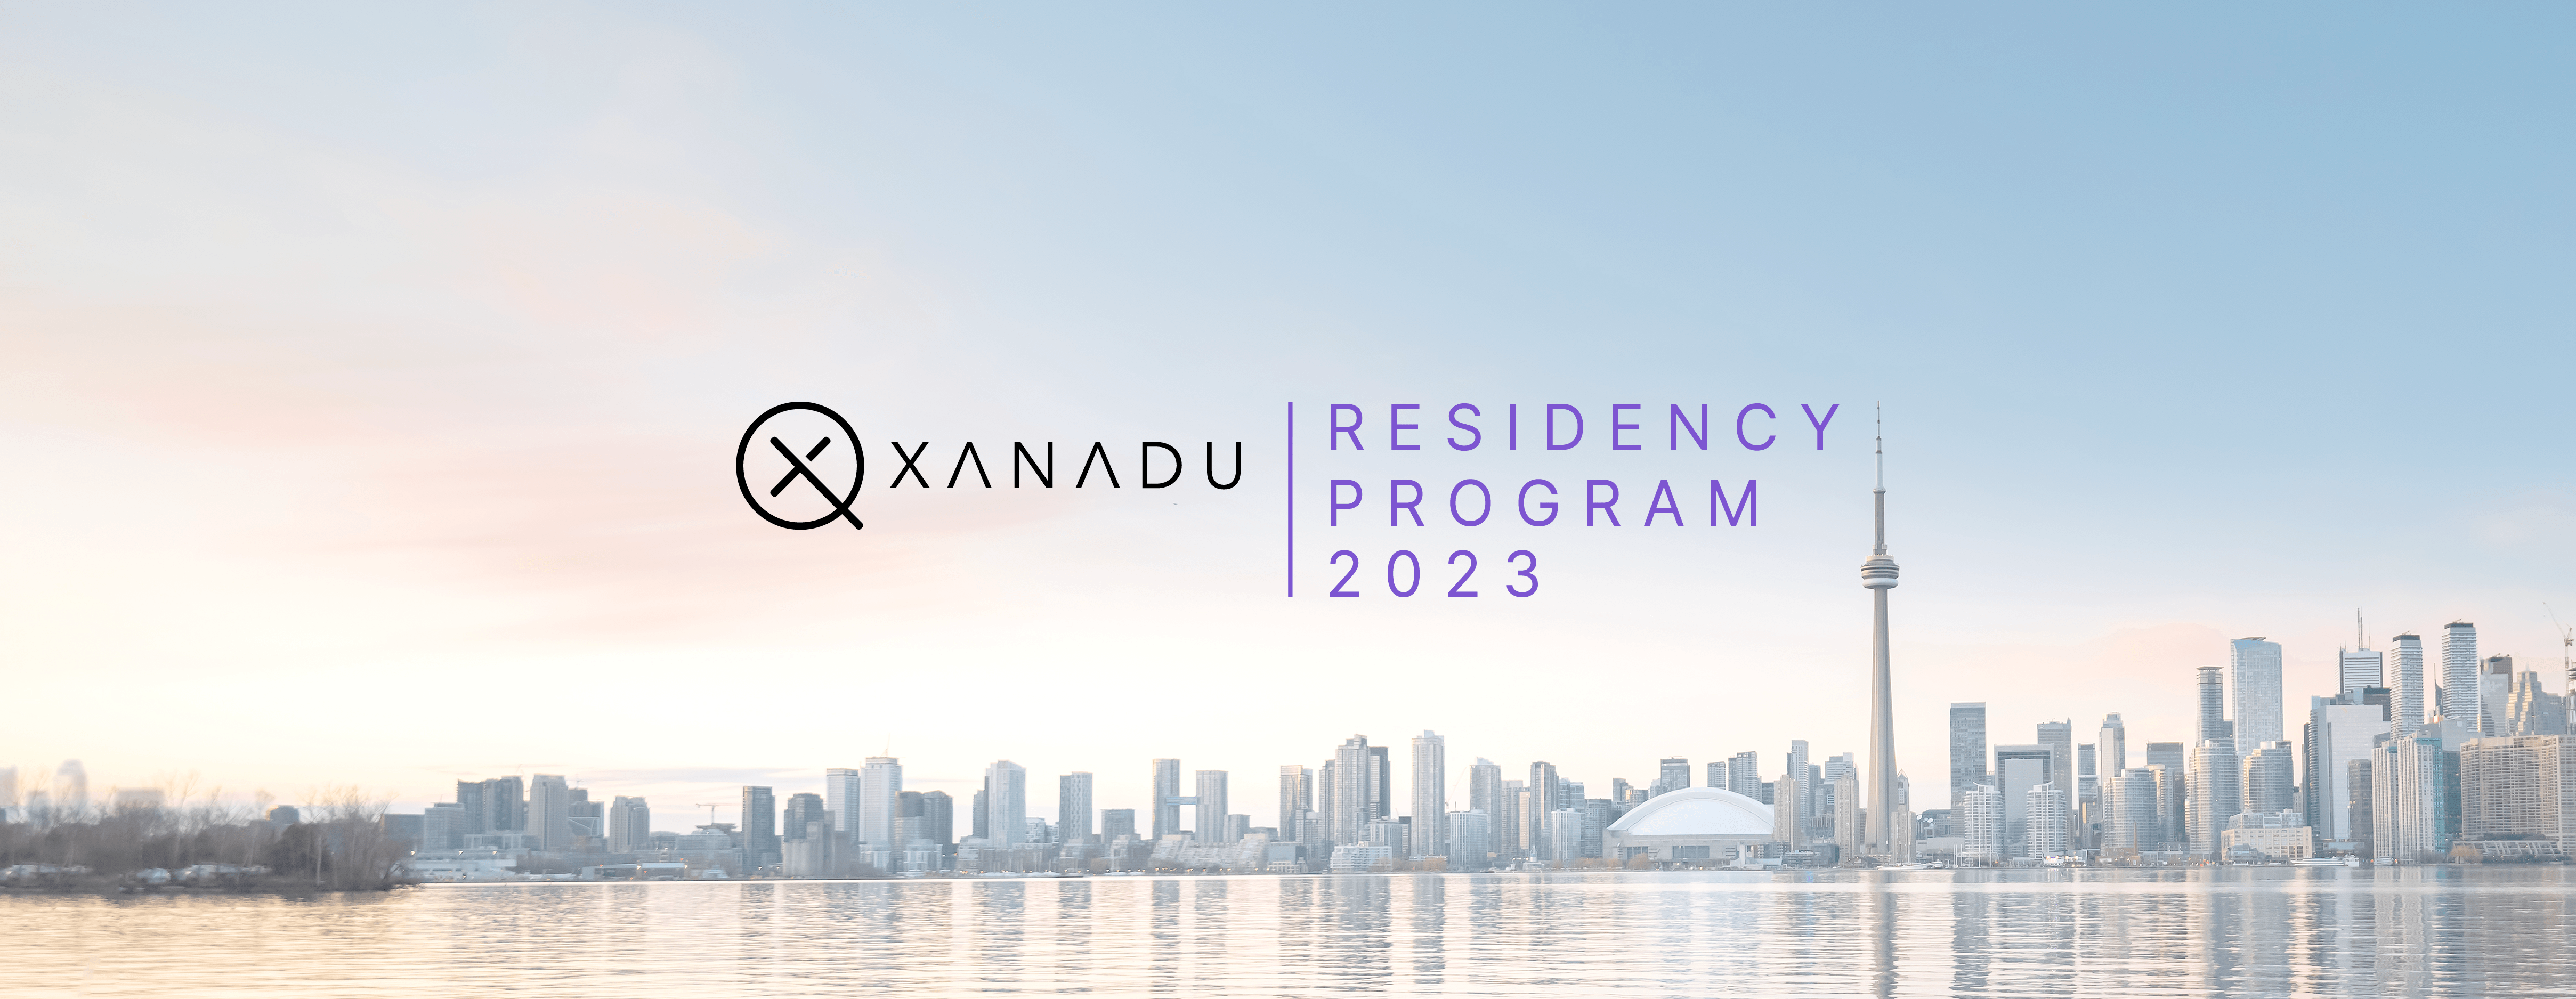 Xanadu 2023 Residency Program